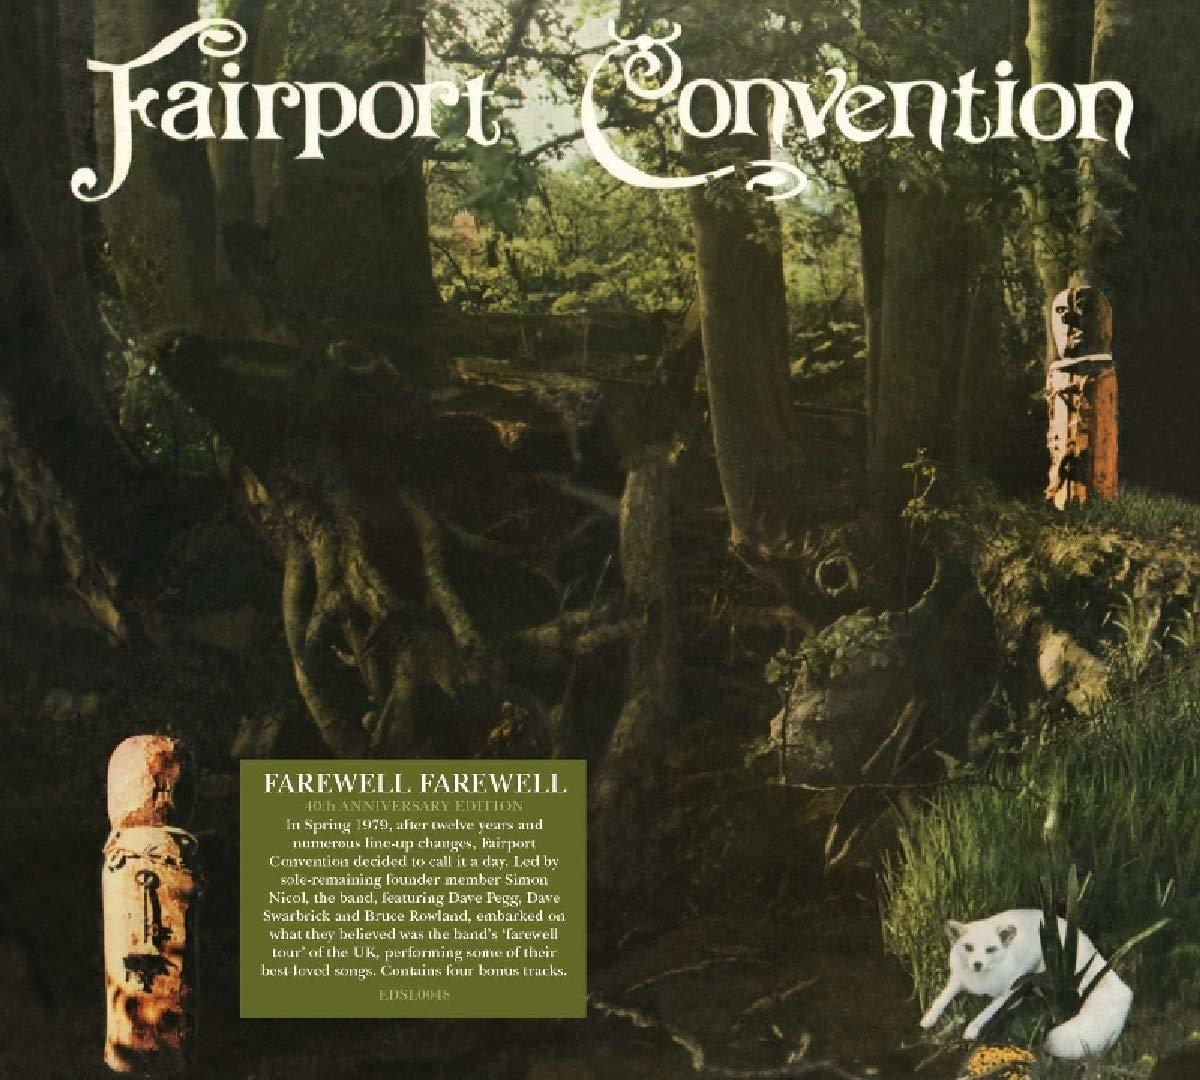 Fairport Convention - Farewell Farewell - (Vinyl)